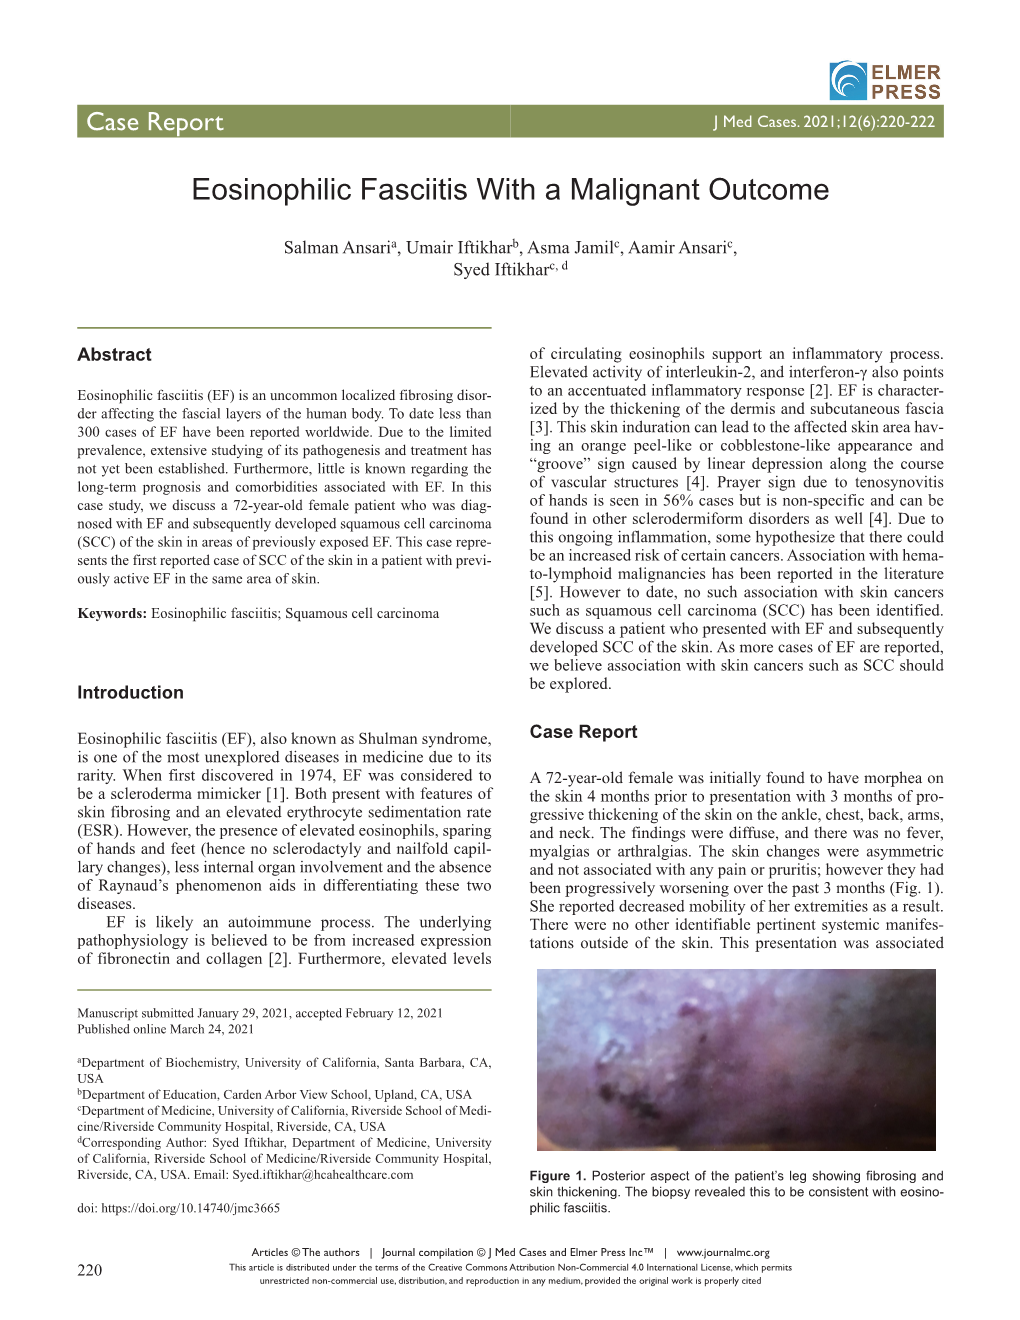 Eosinophilic Fasciitis with a Malignant Outcome